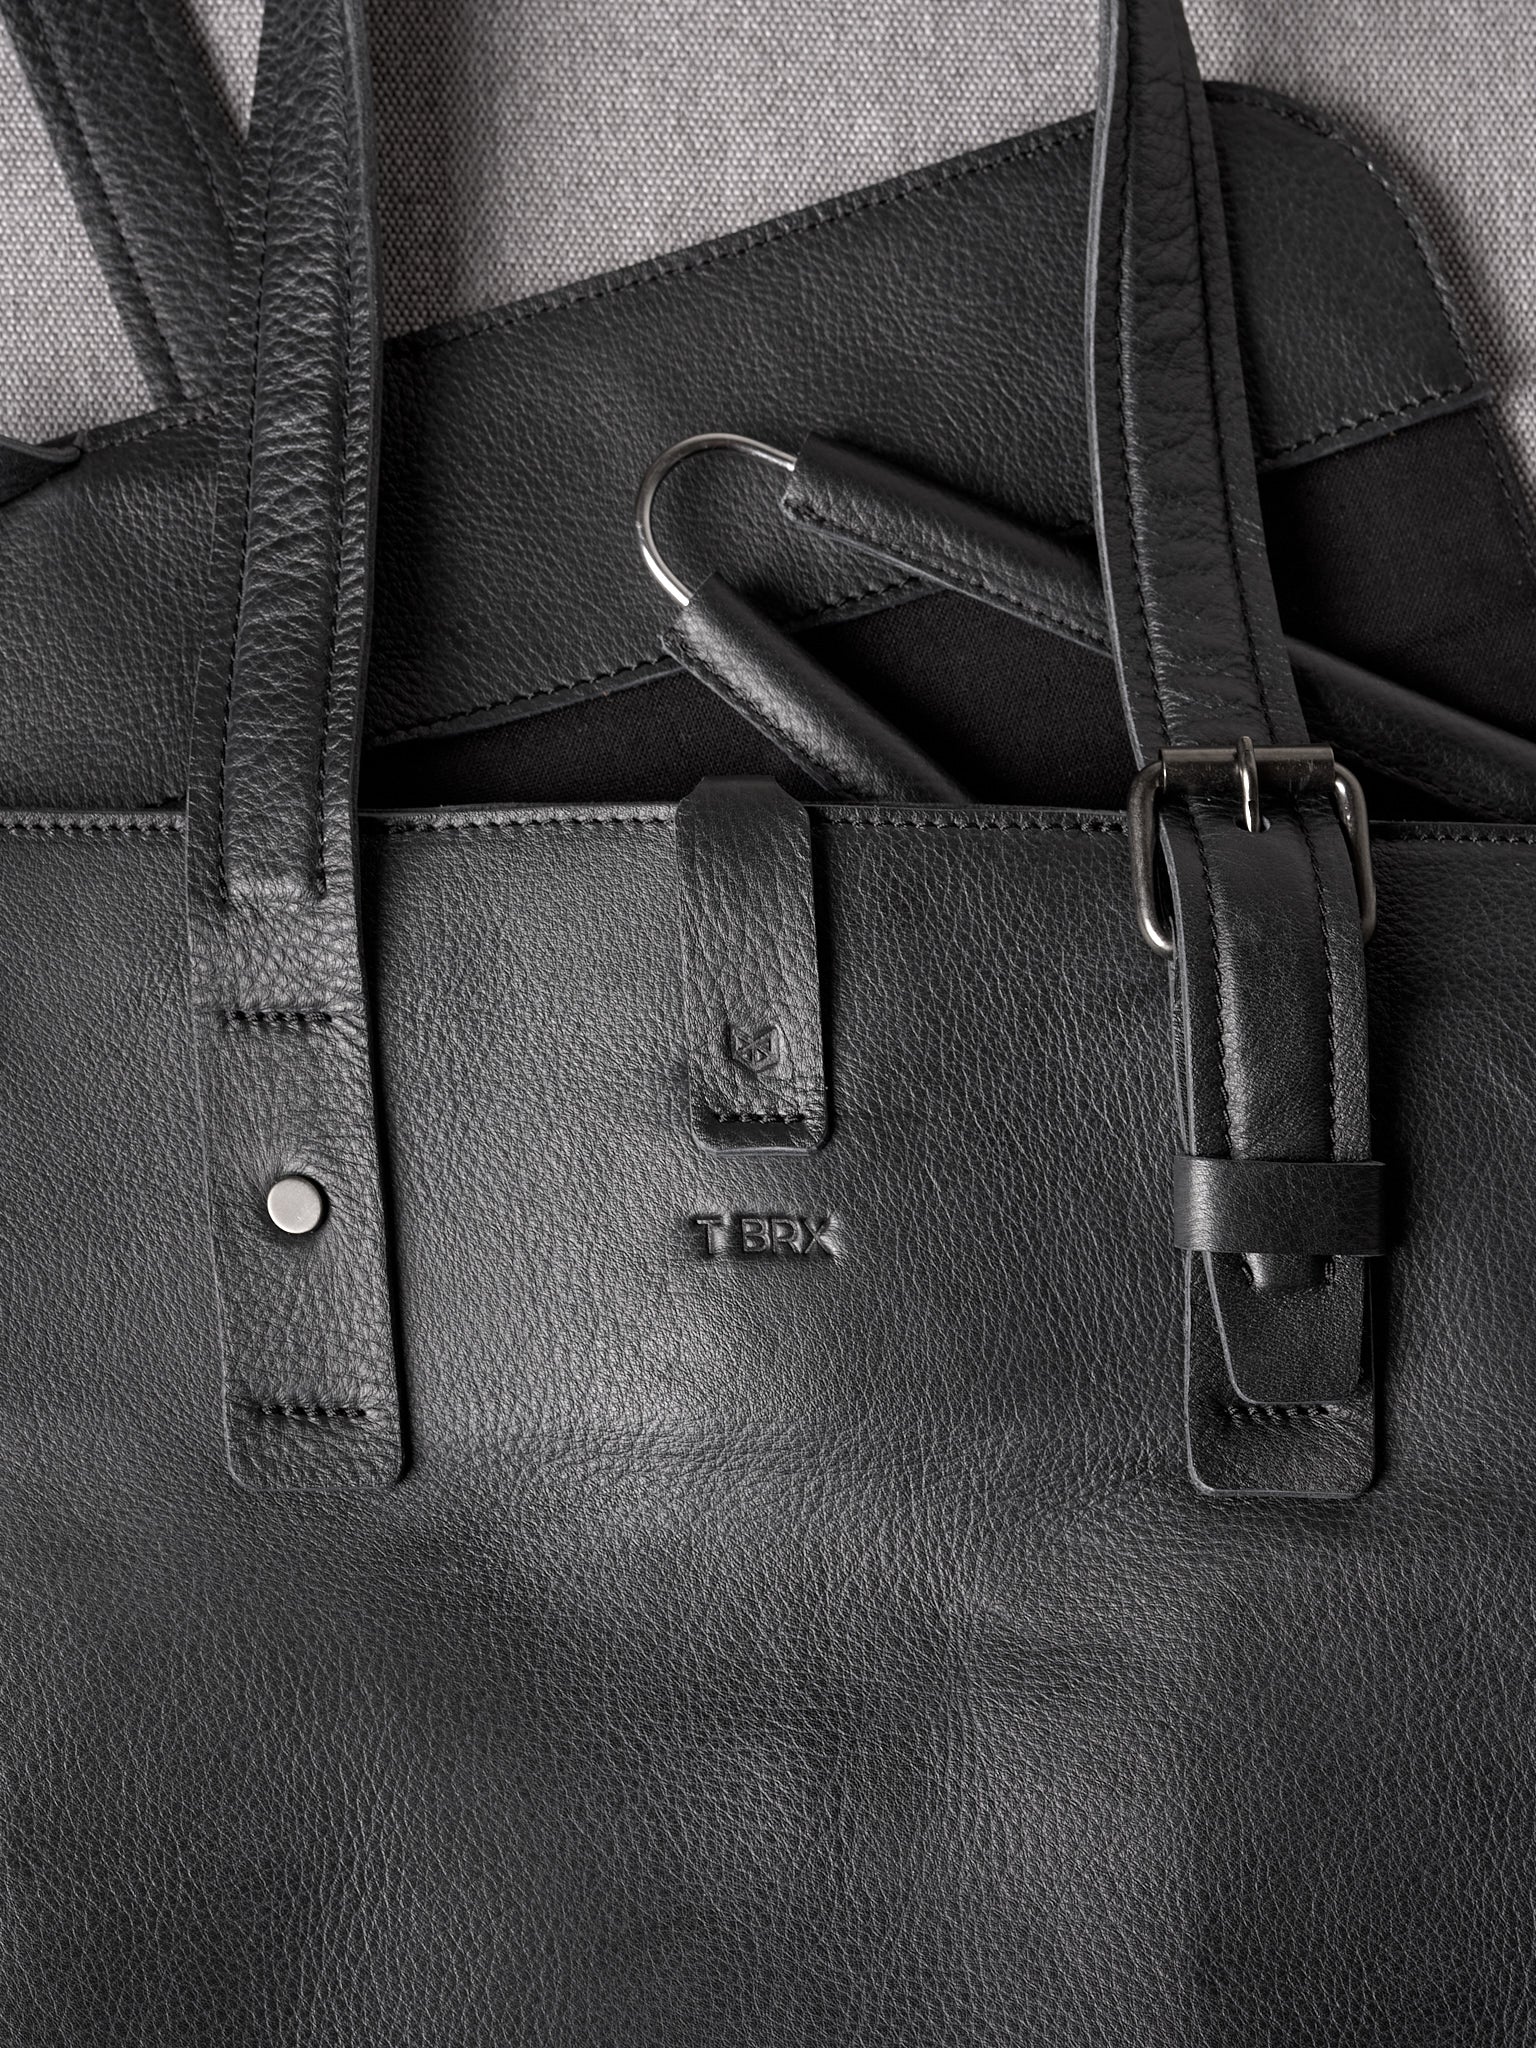 Customization. Name engraved. Travel Garment Bag Black by Capra Leather